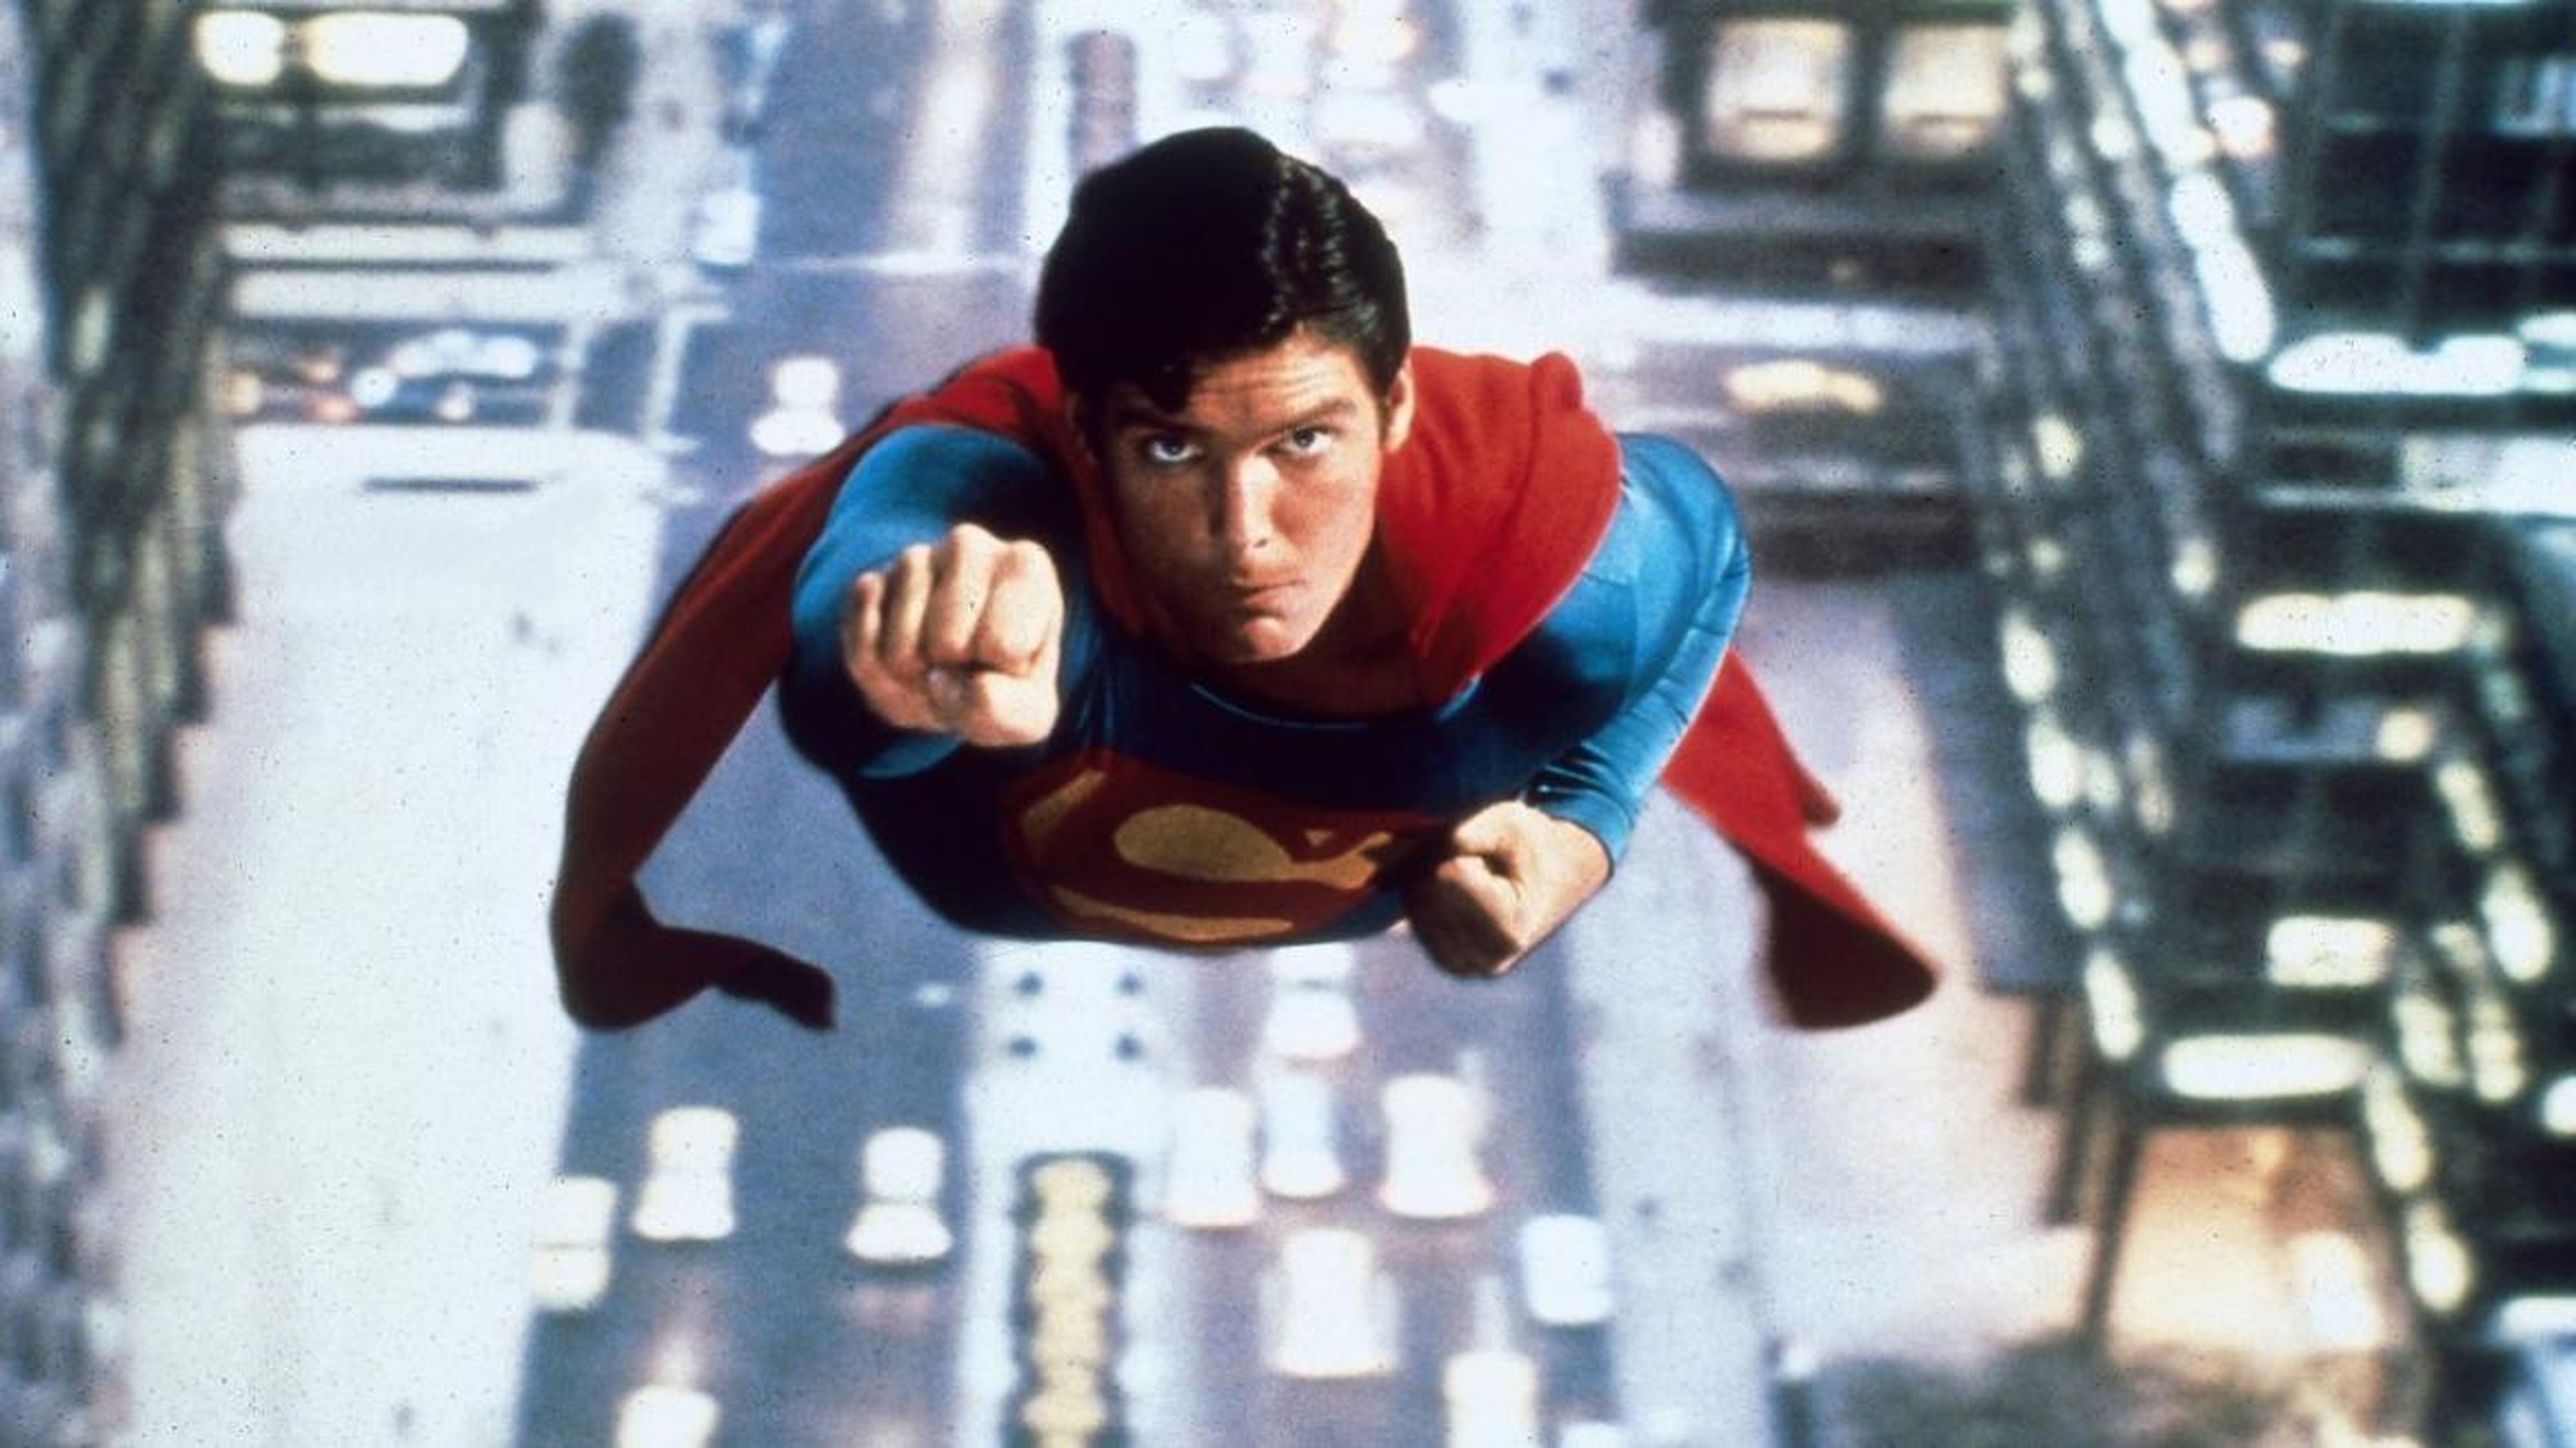 4. Christopher Reeve as Clark Kent/Superman in "Superman" (1978)